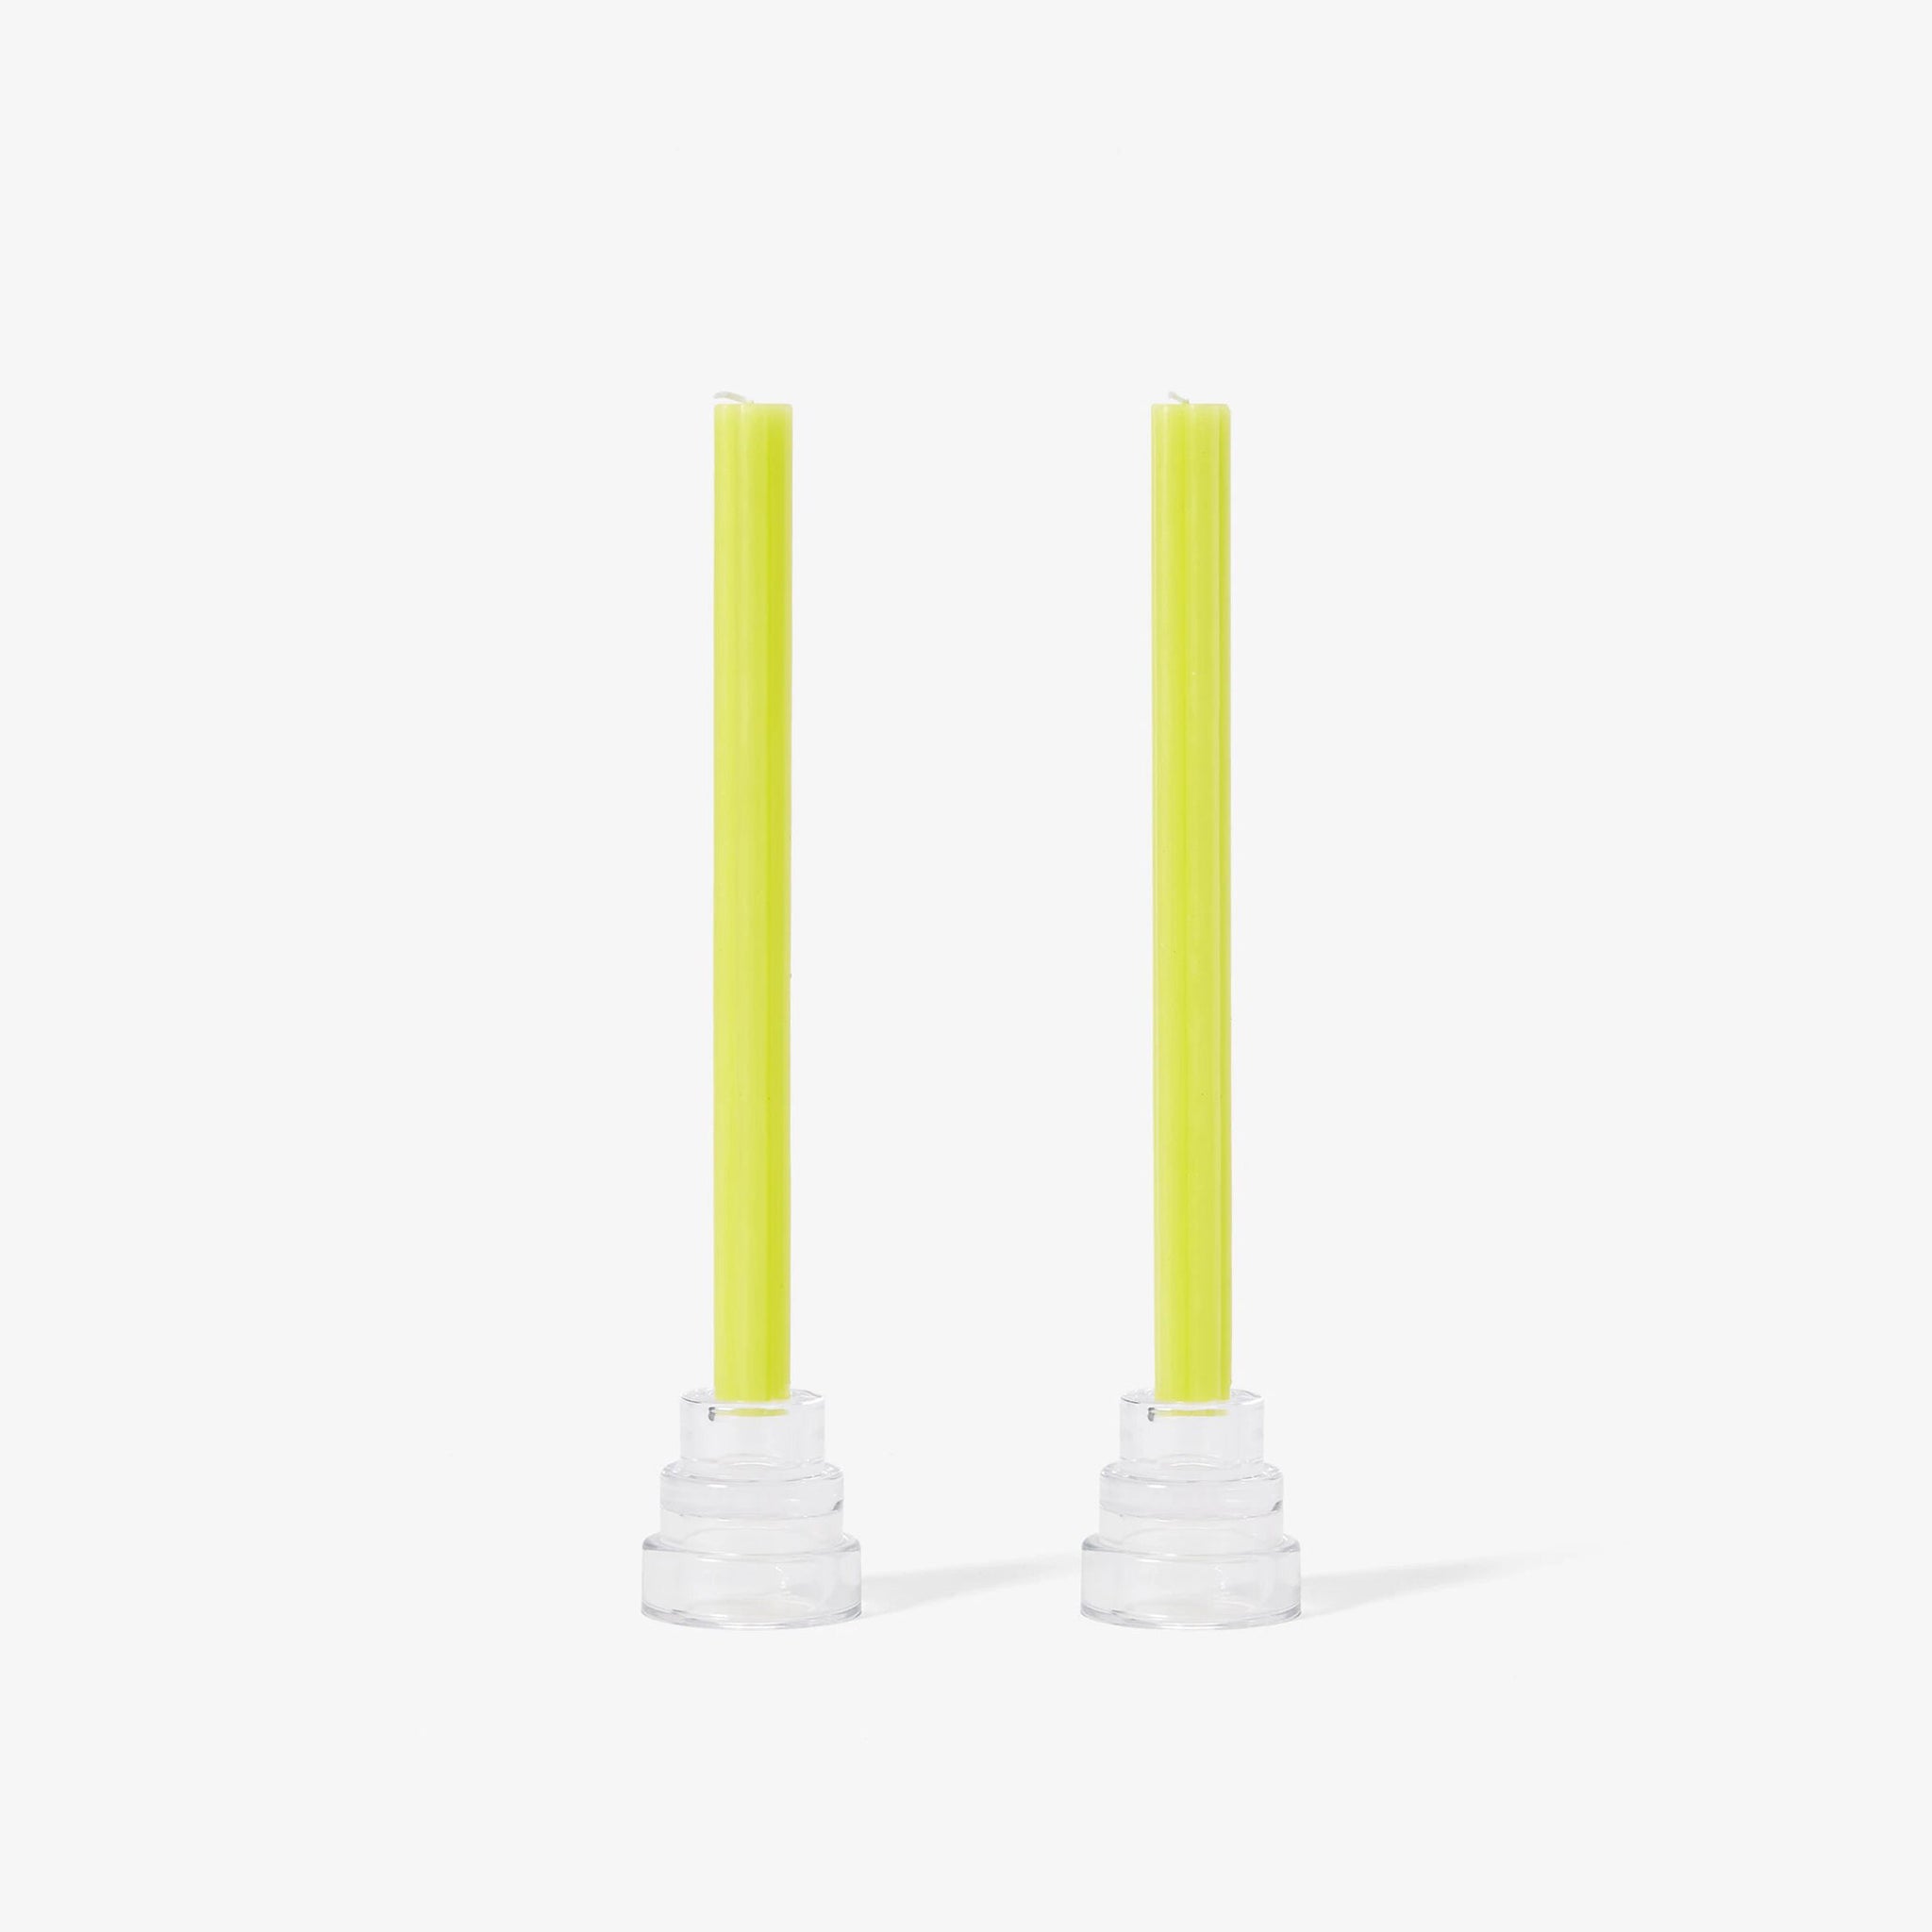 Areaware Dusen Dusen Taper Candles - Set of 2 - Yellow